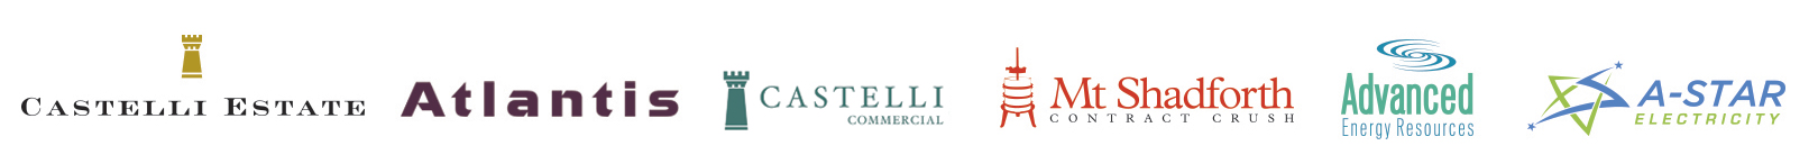 castelli-group-logos-1800x162